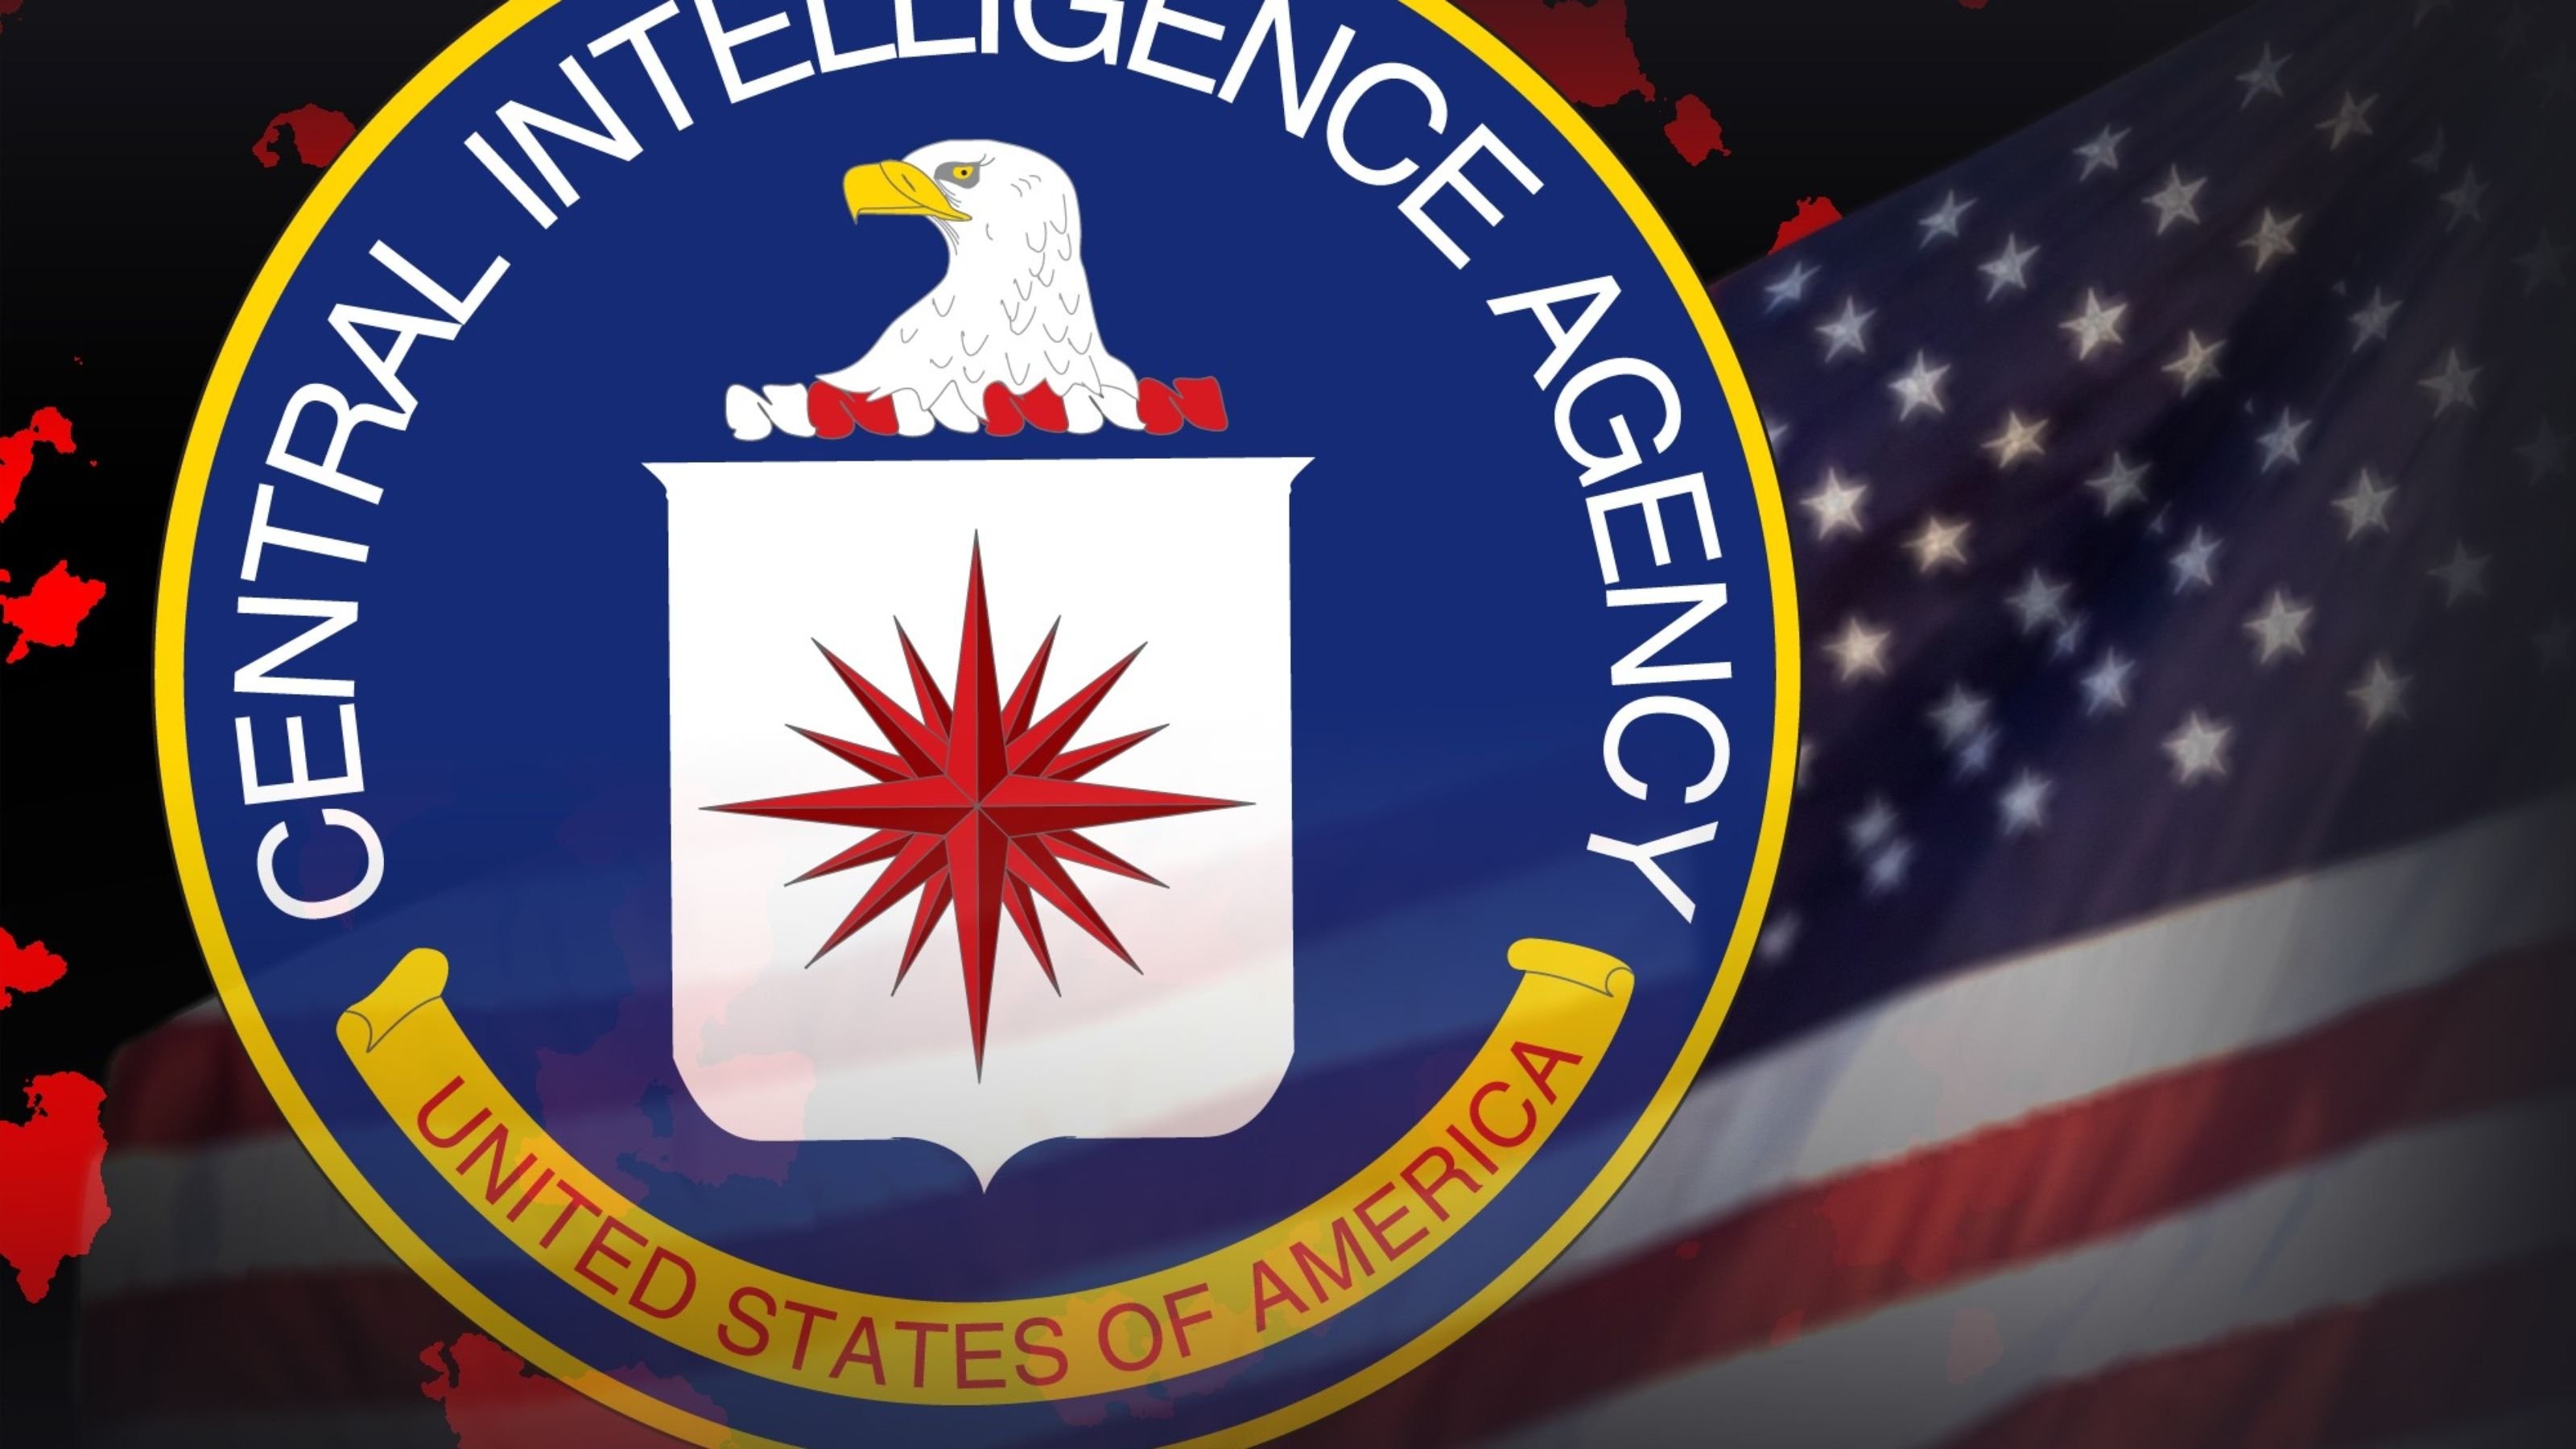 CIA Central Intelligence Agency crime usa america spy logo wallpaper 421681 WallpaperUP